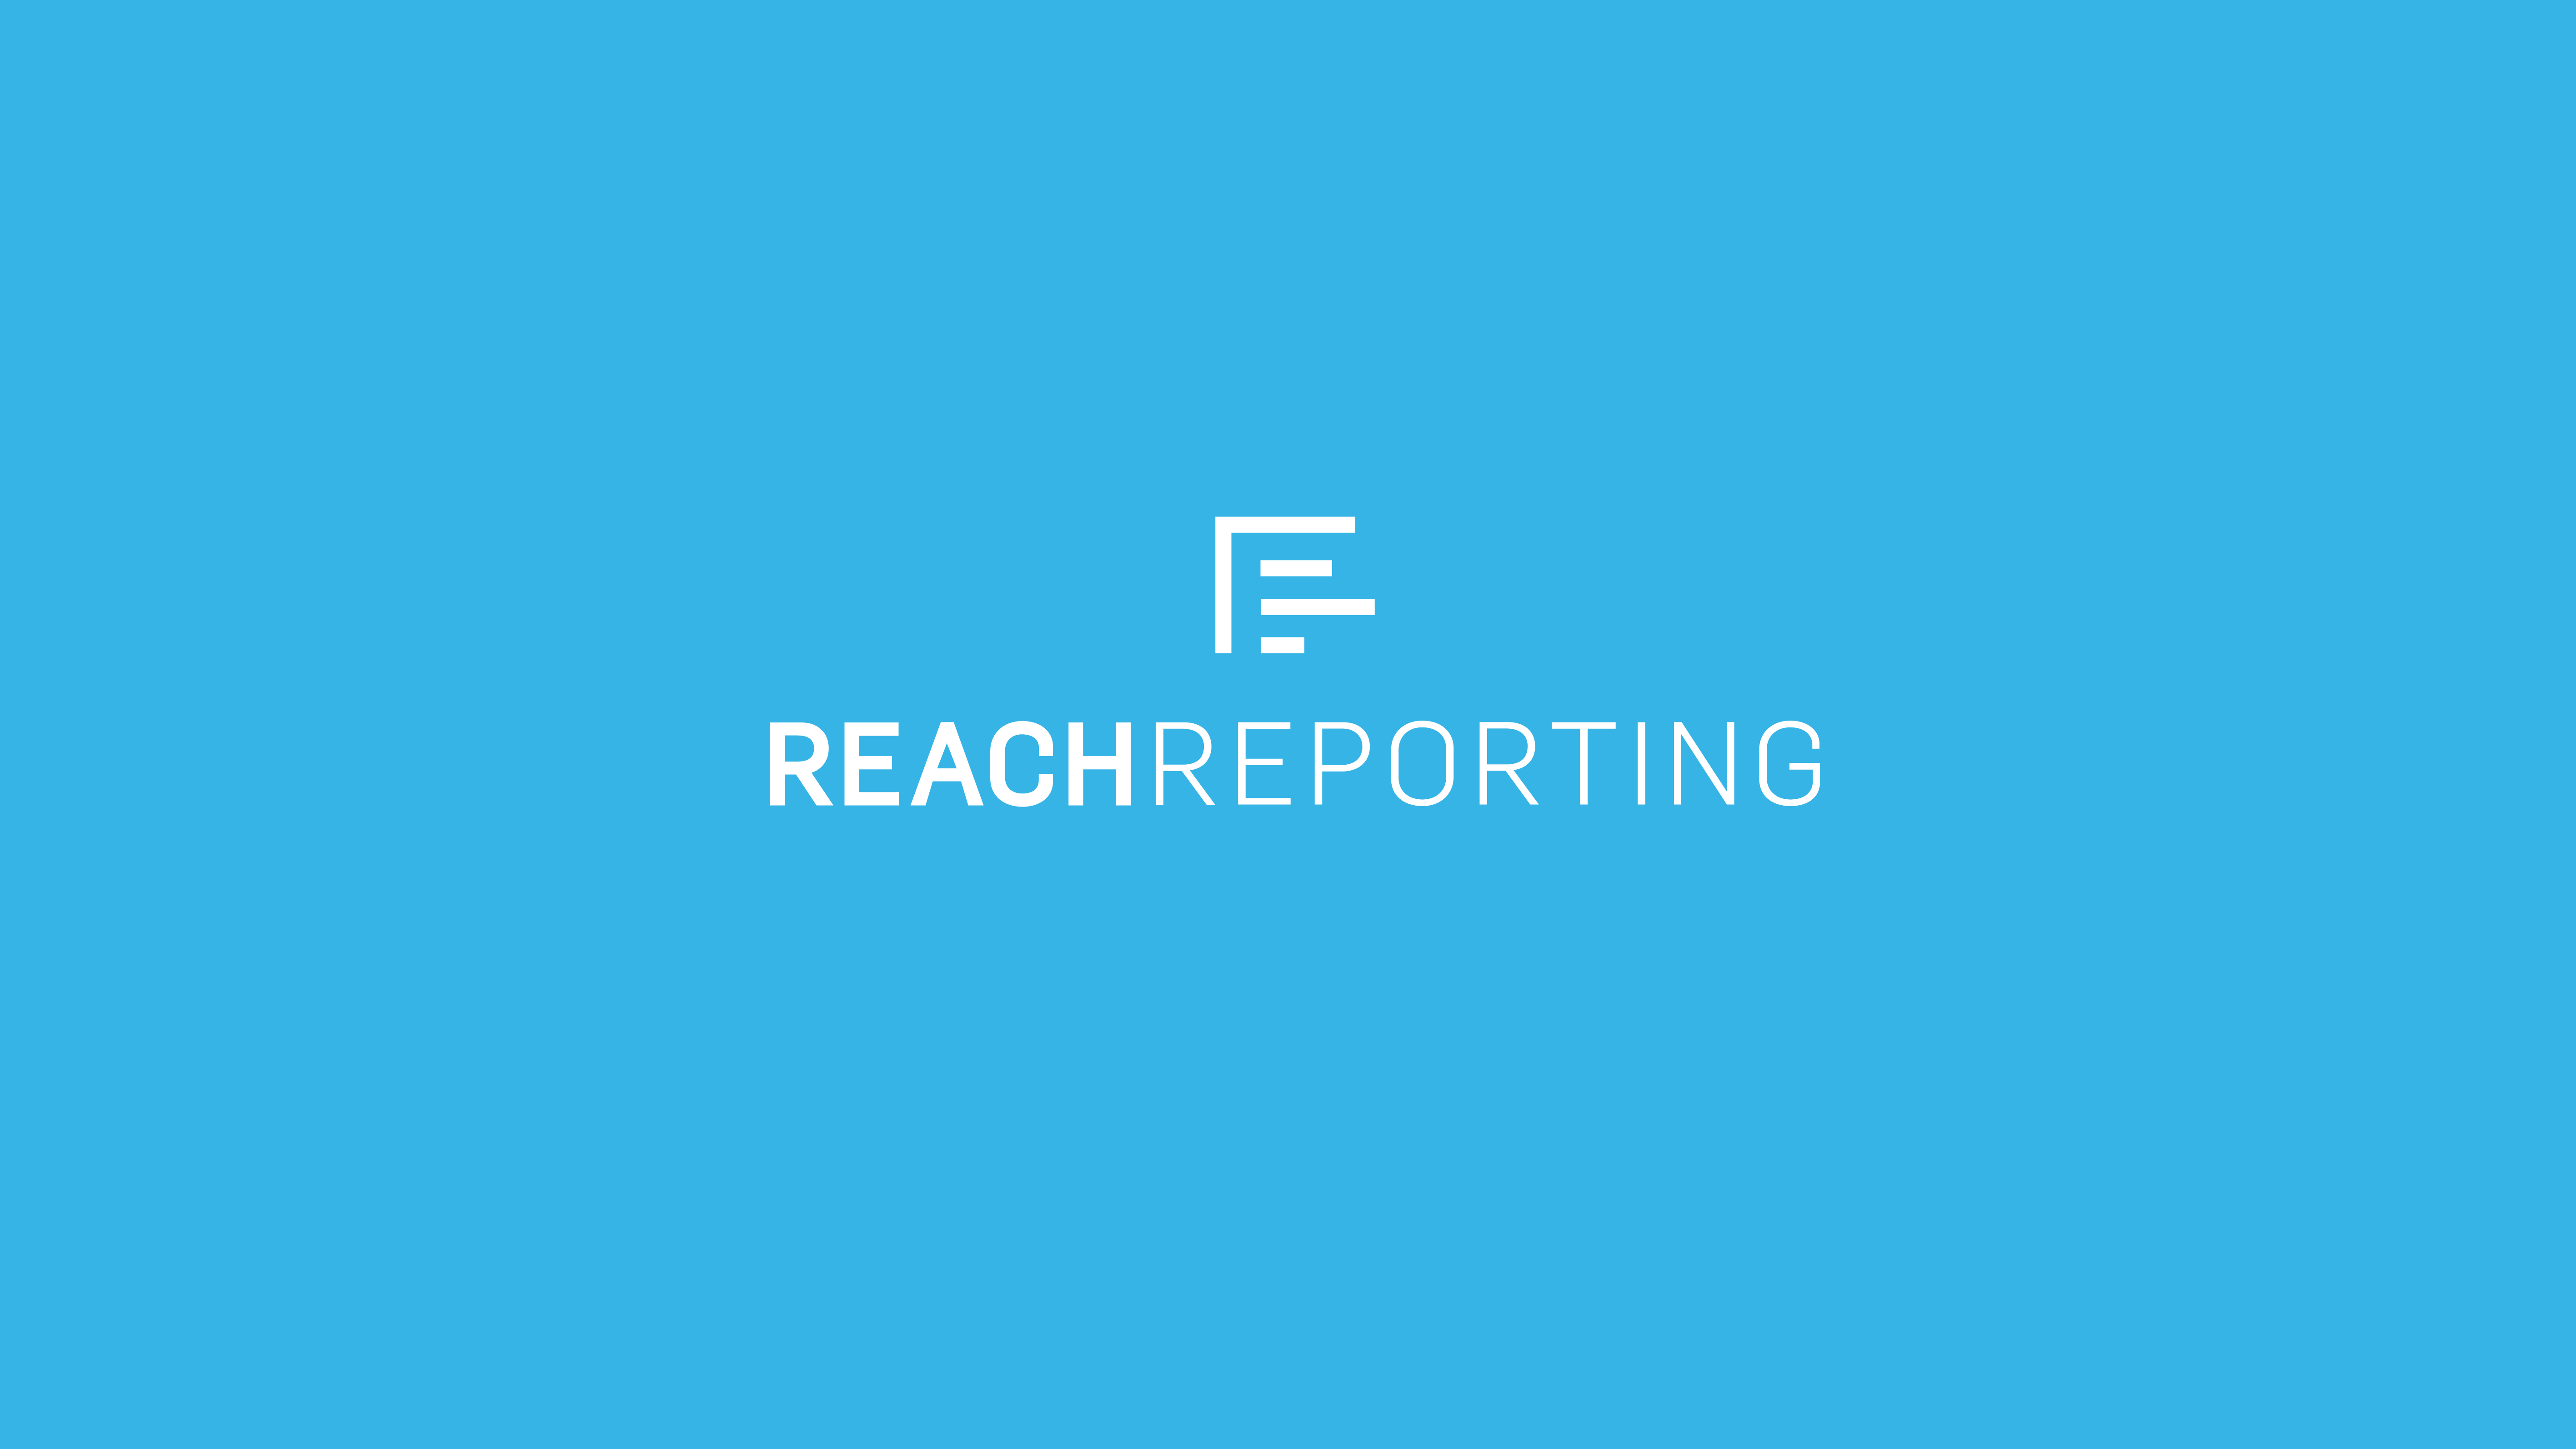 Reach Reporting